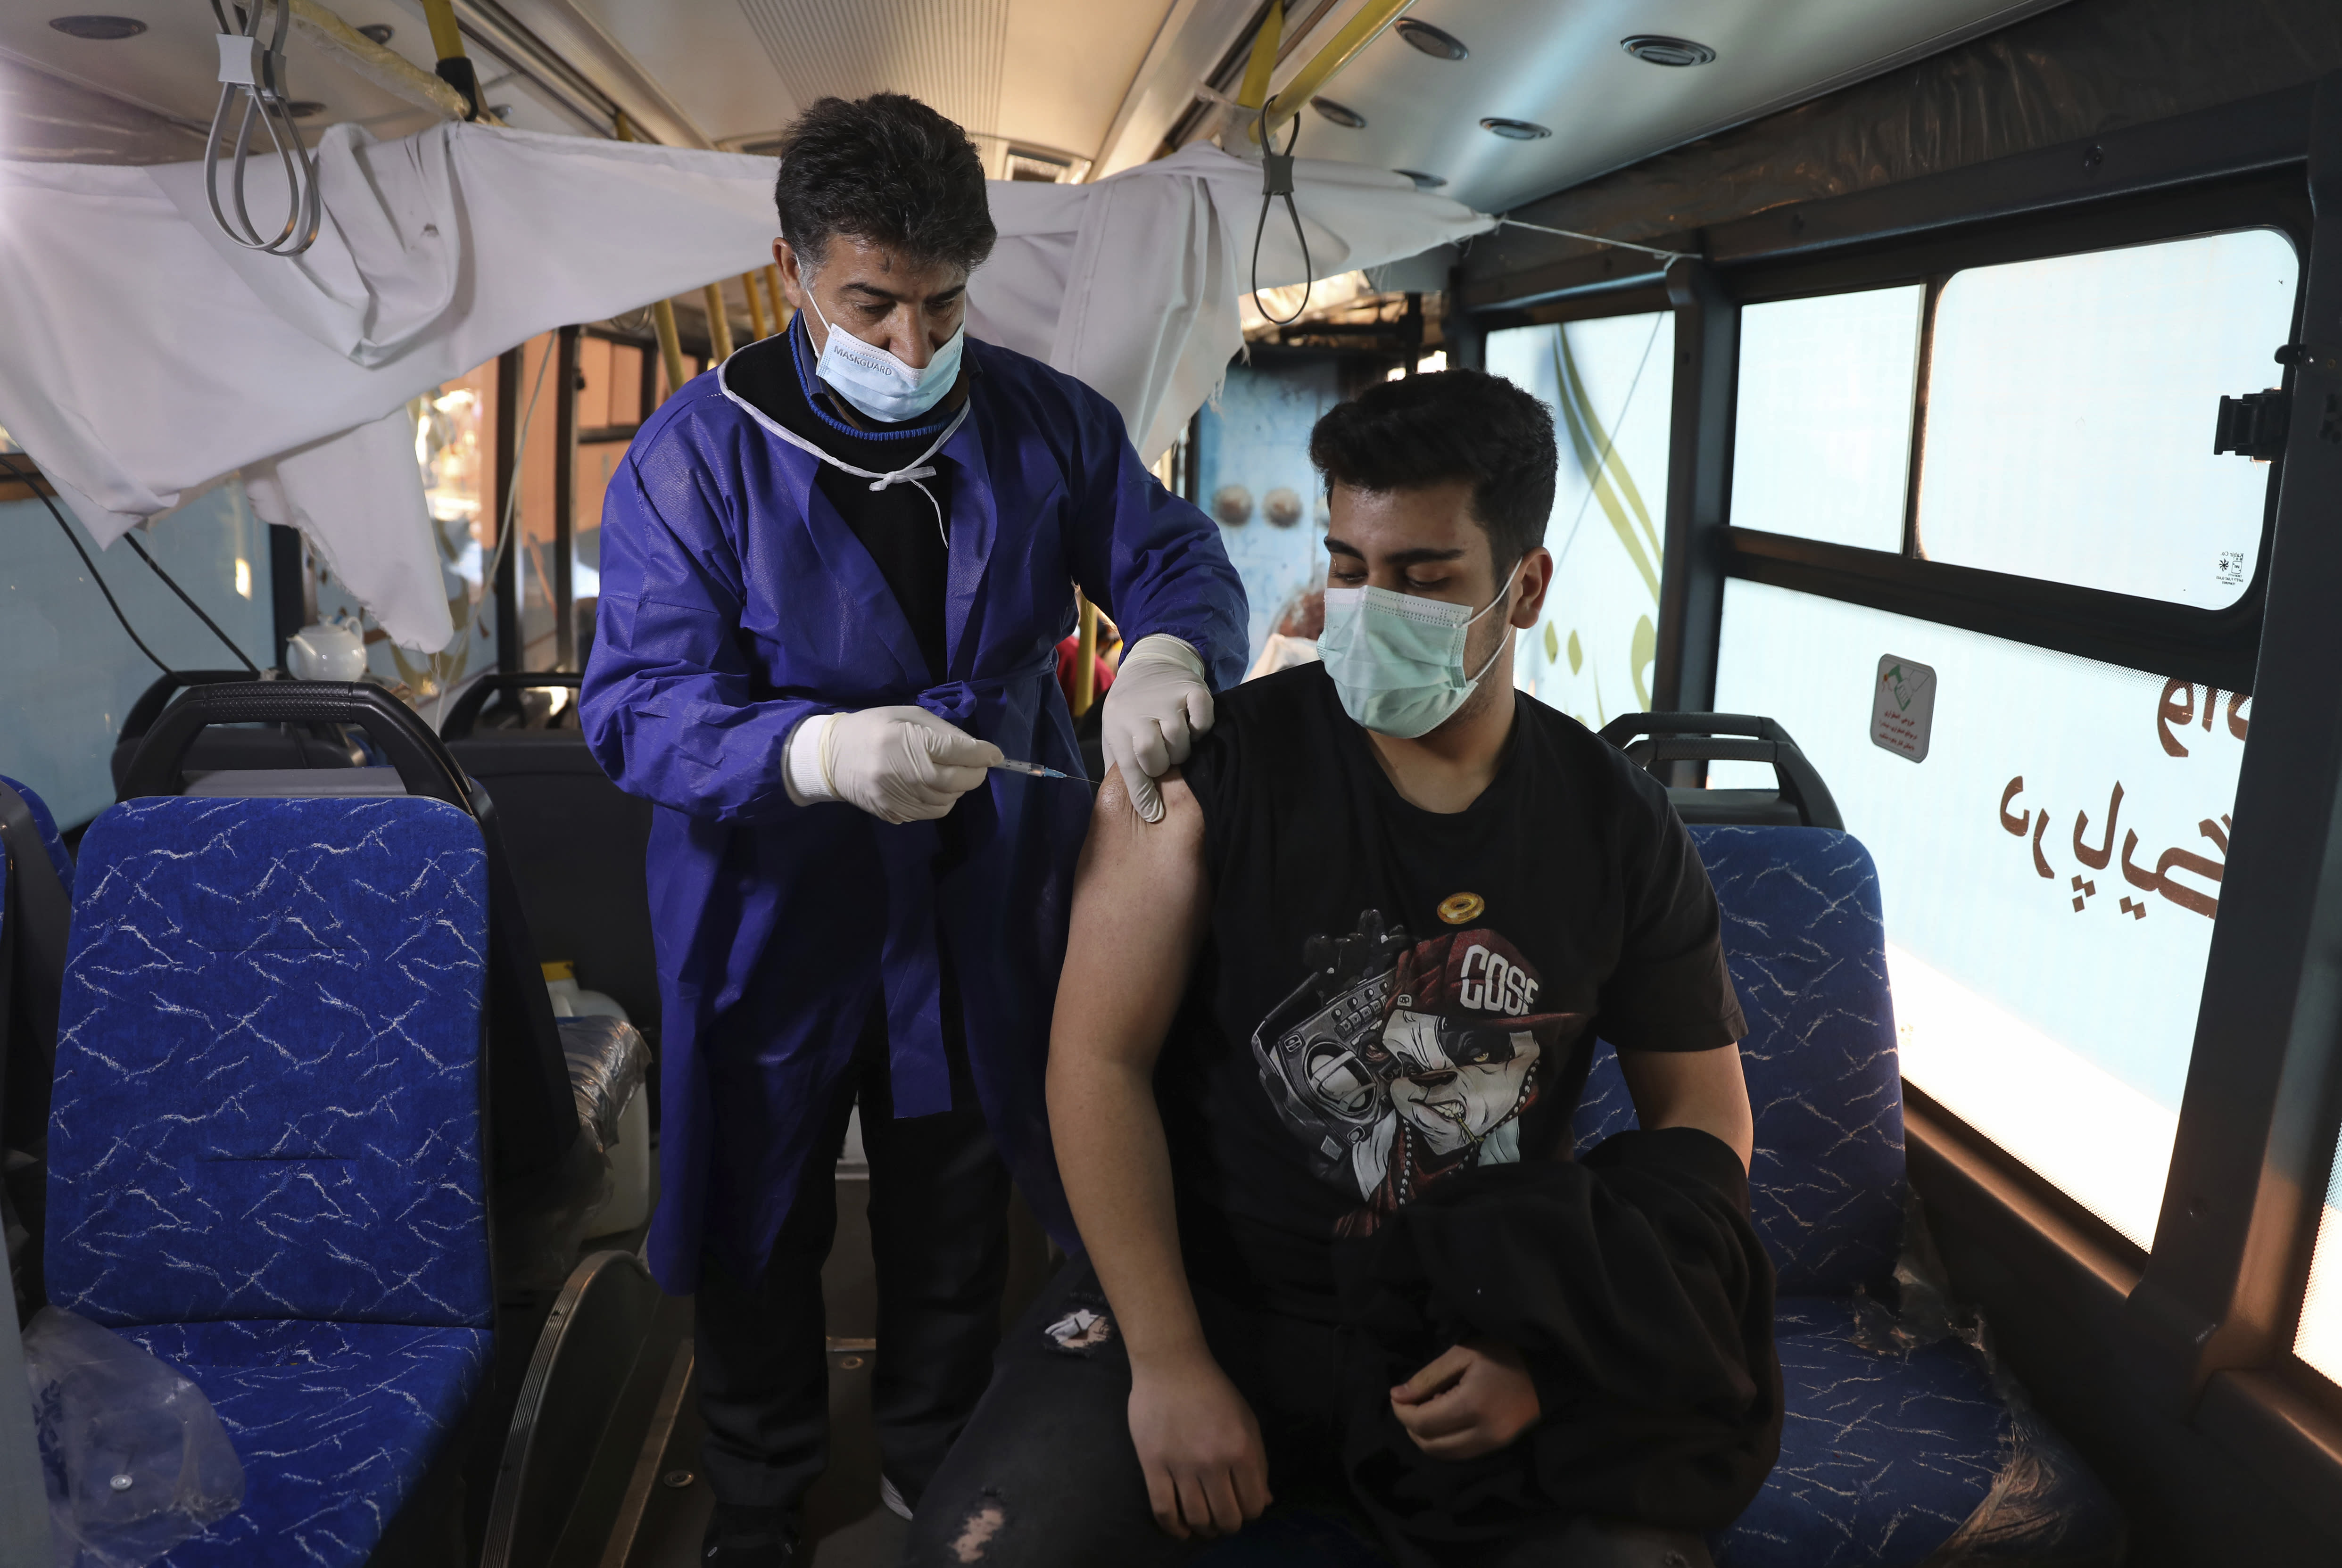 Virus-ravaged Iran finds brief respite with mass vaccination